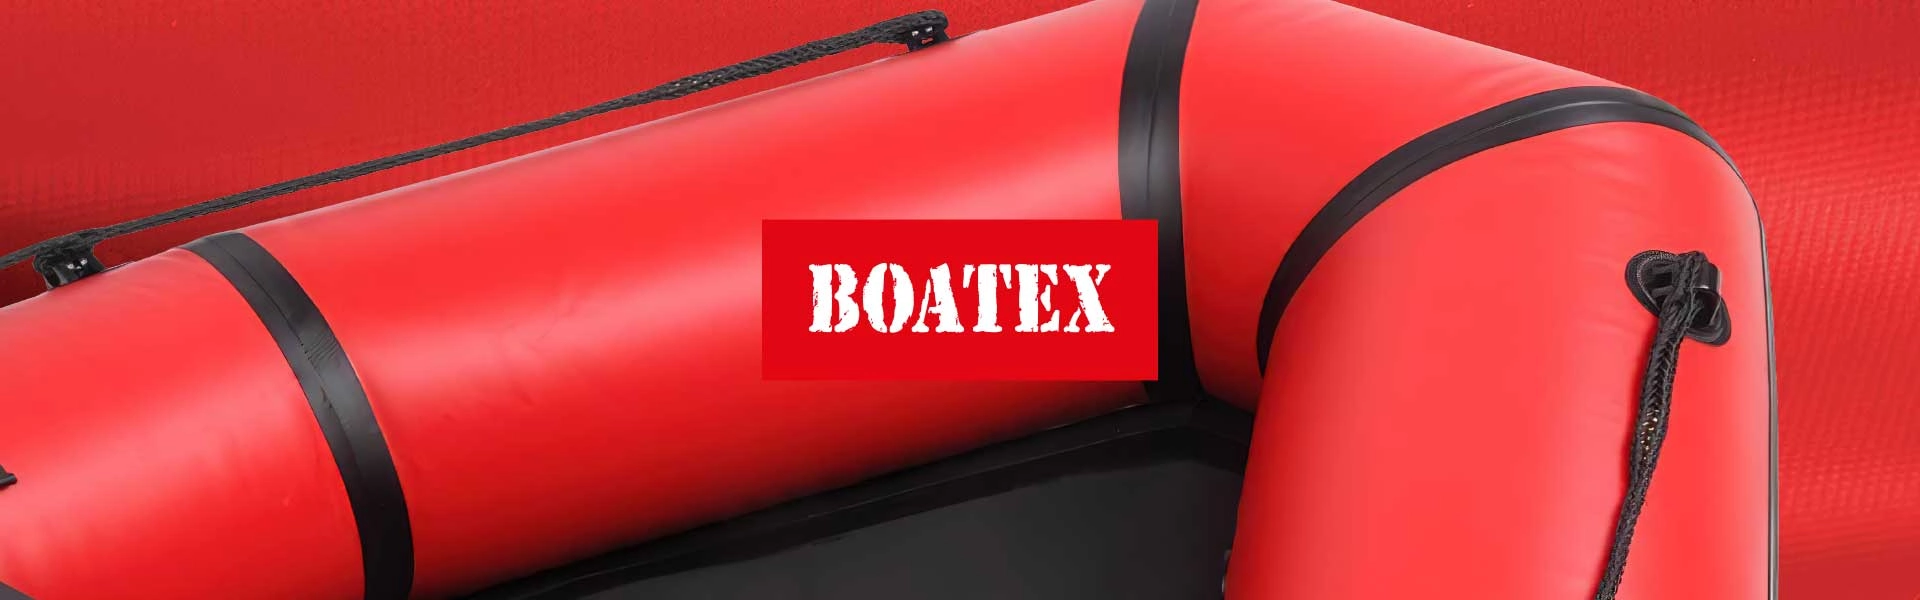 BOATEX плотностью 650 г/м.кв красного цвета – 3,78$ за м.кв